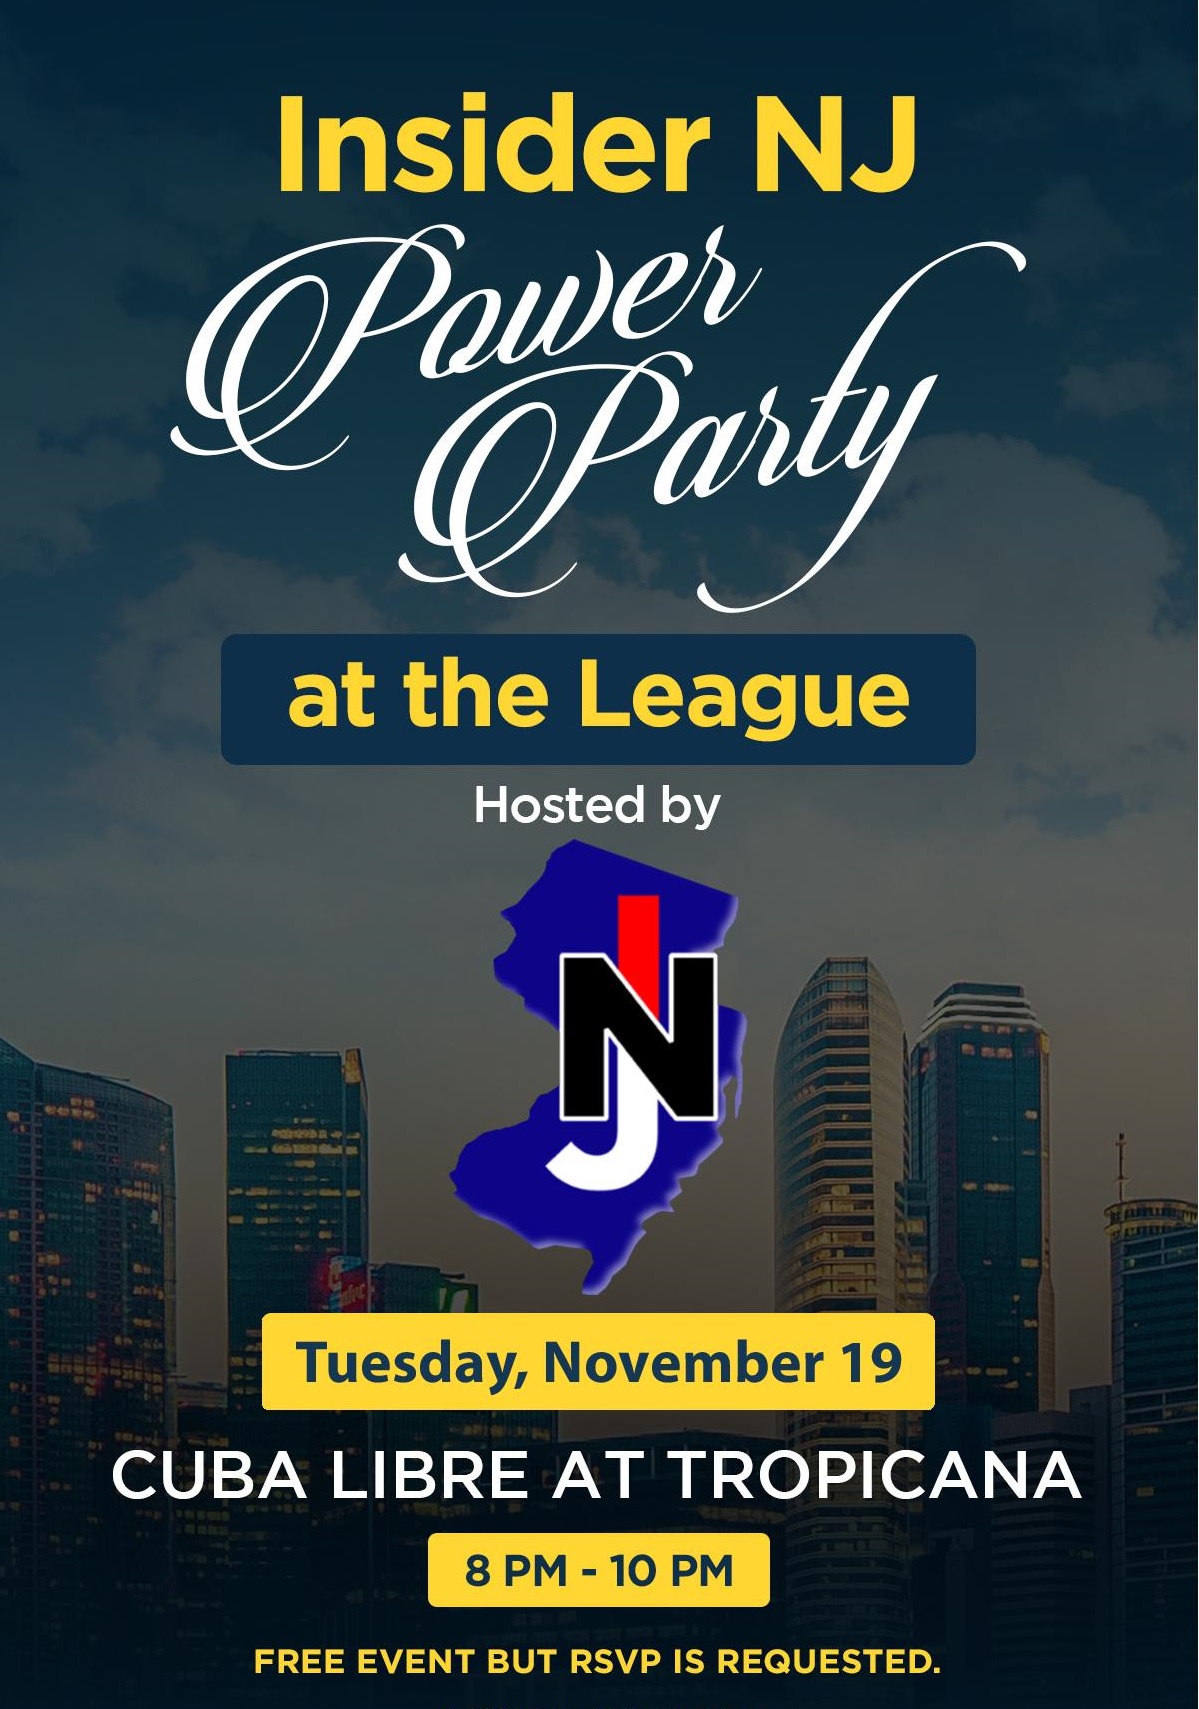 Insider NJ Power Party 3 Invitation